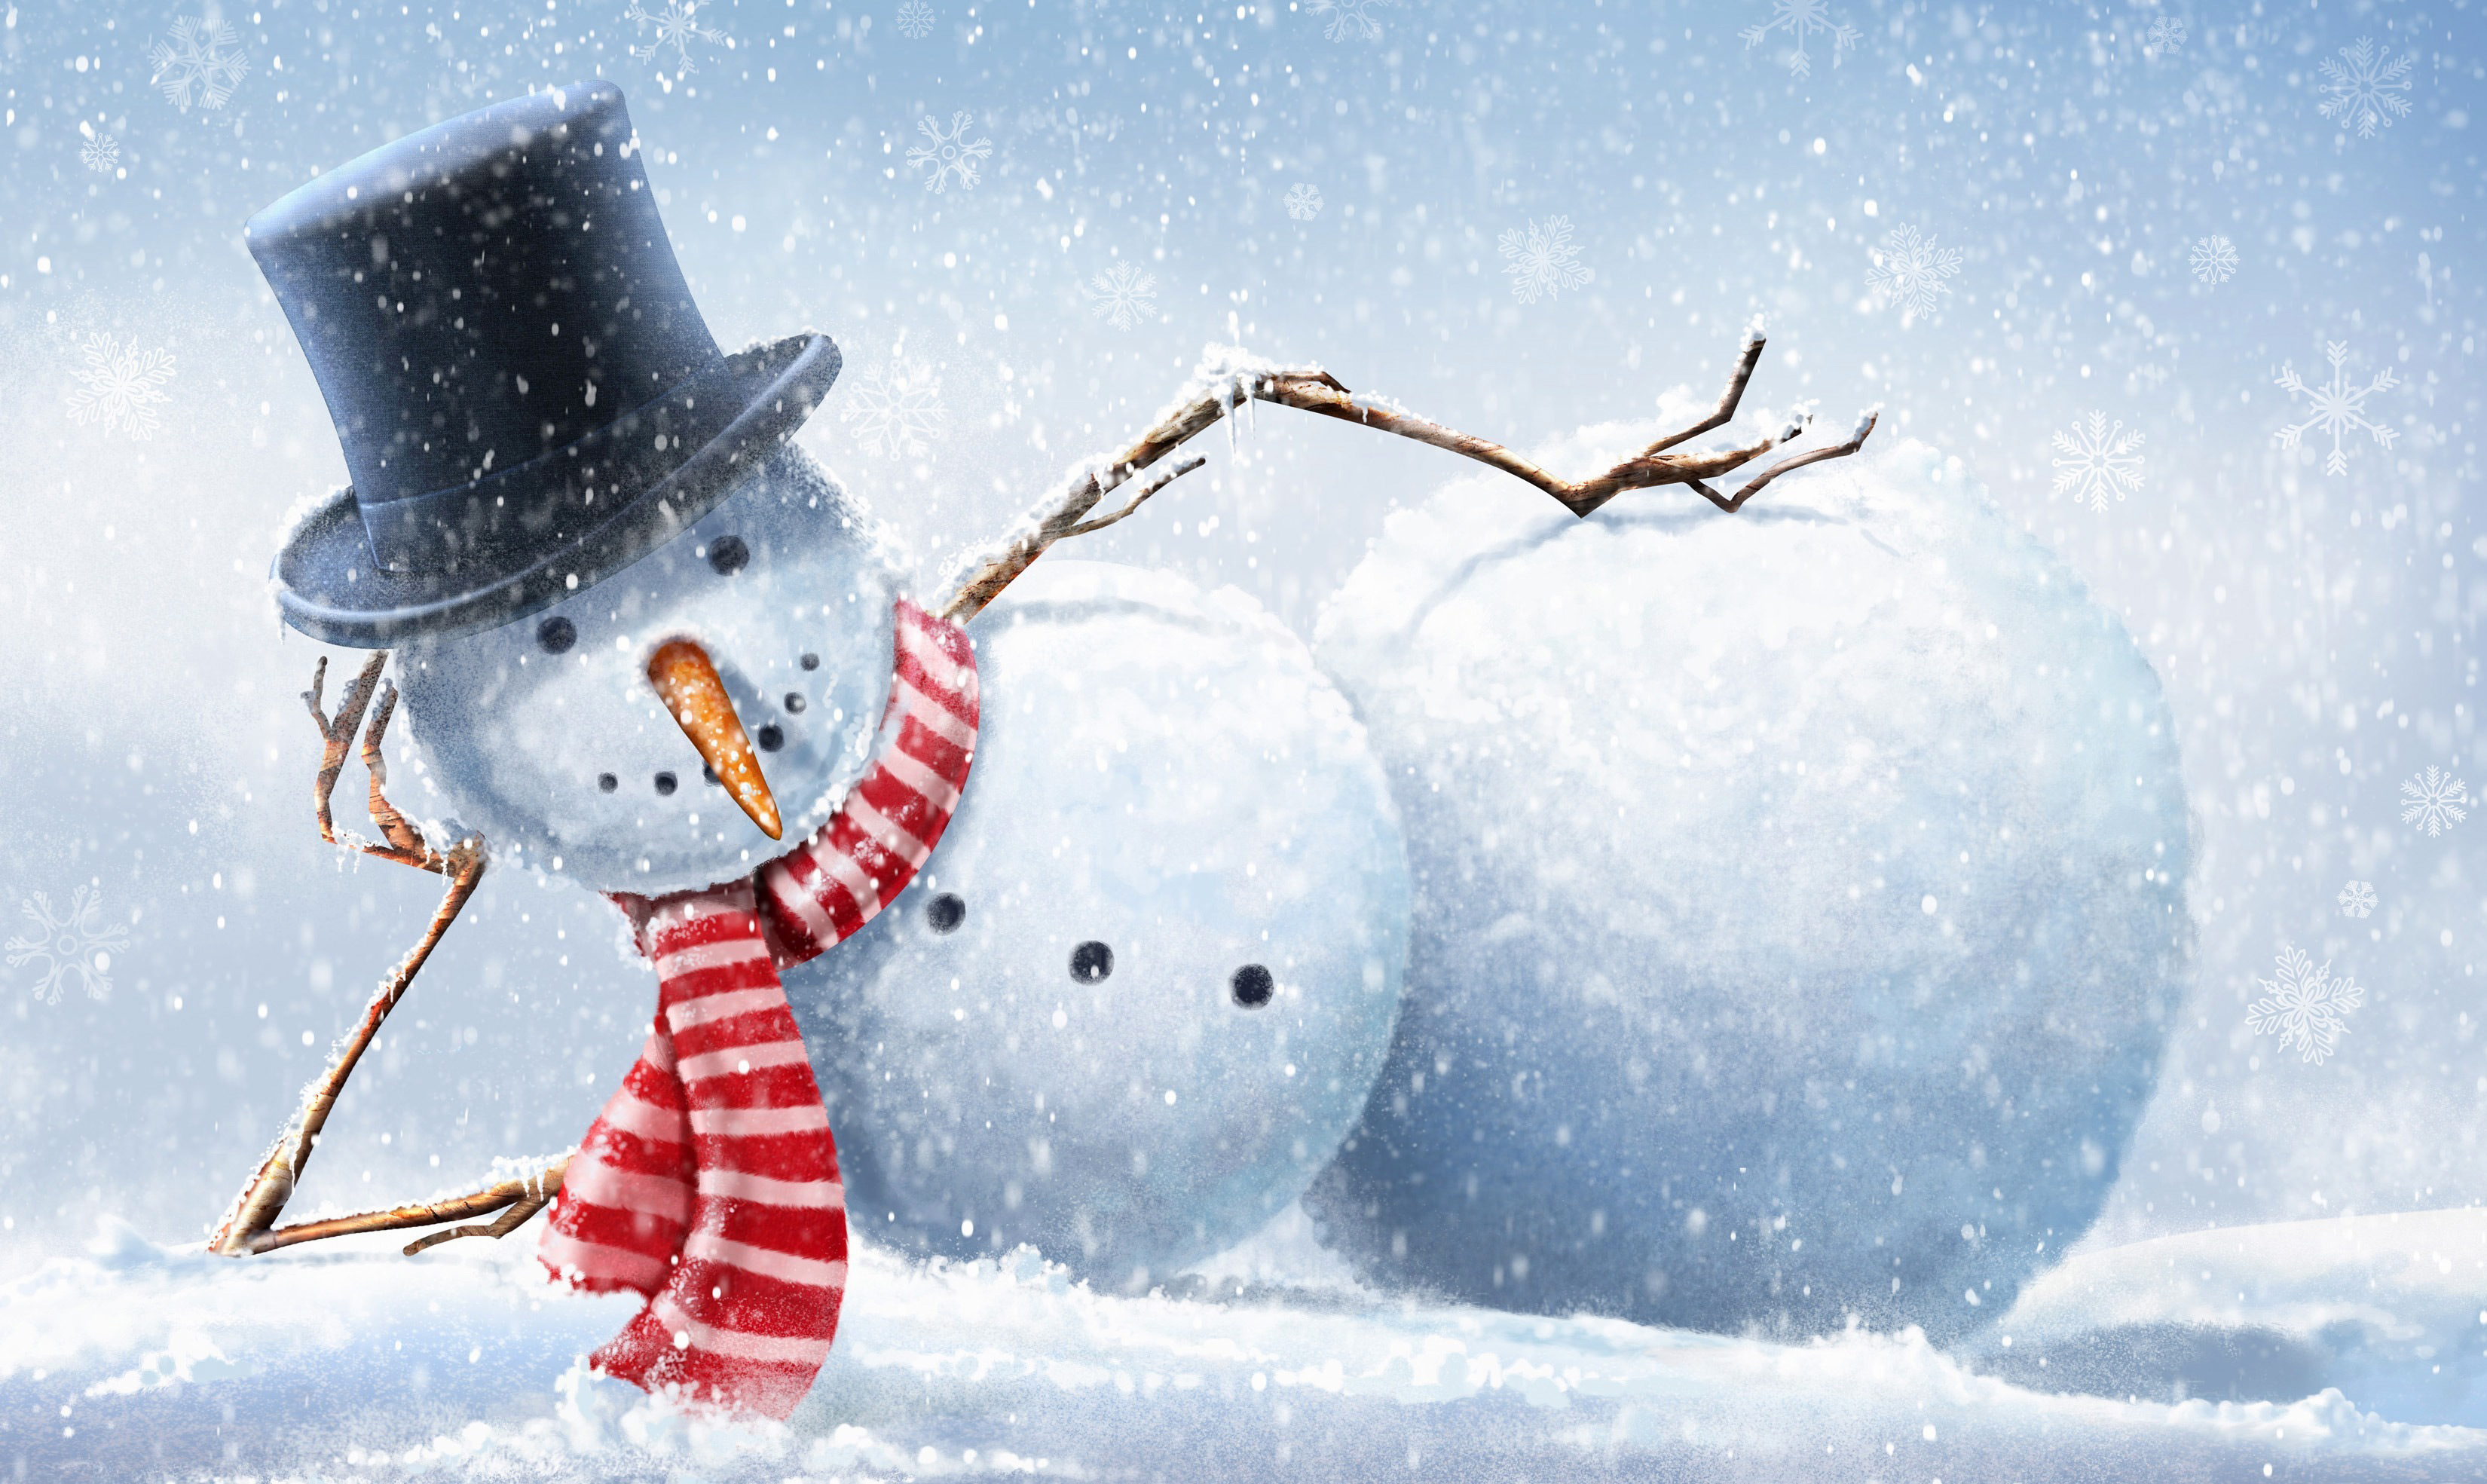 Winter_Background_with_Snowman.jpg